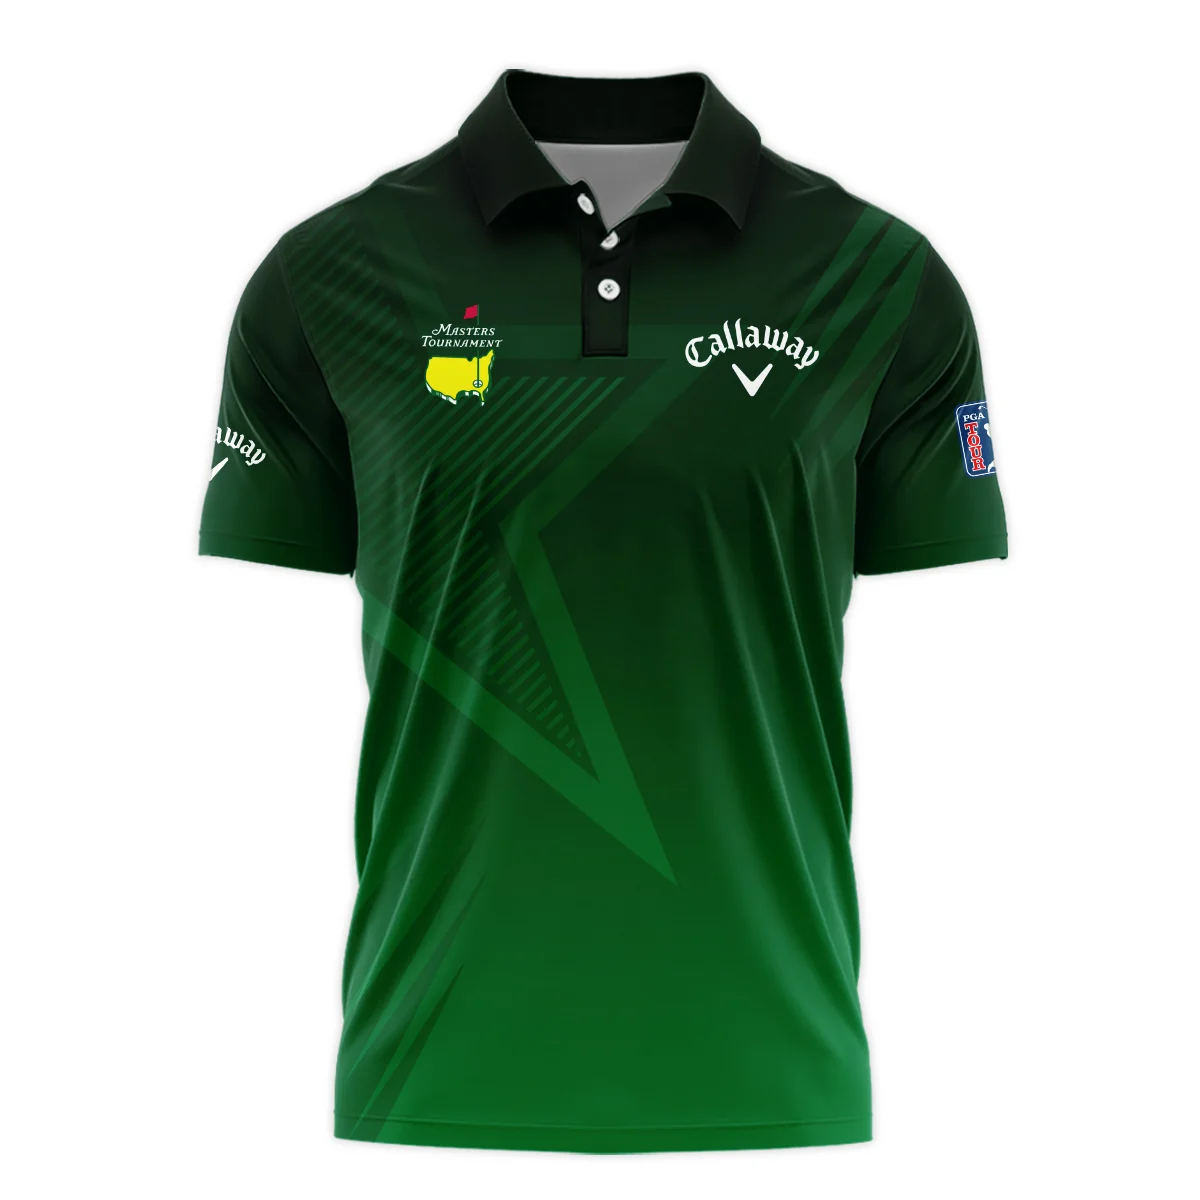 Callaway Masters Tournament Polo Shirt Dark Green Gradient Star Pattern Golf Sports Polo Shirt For Men